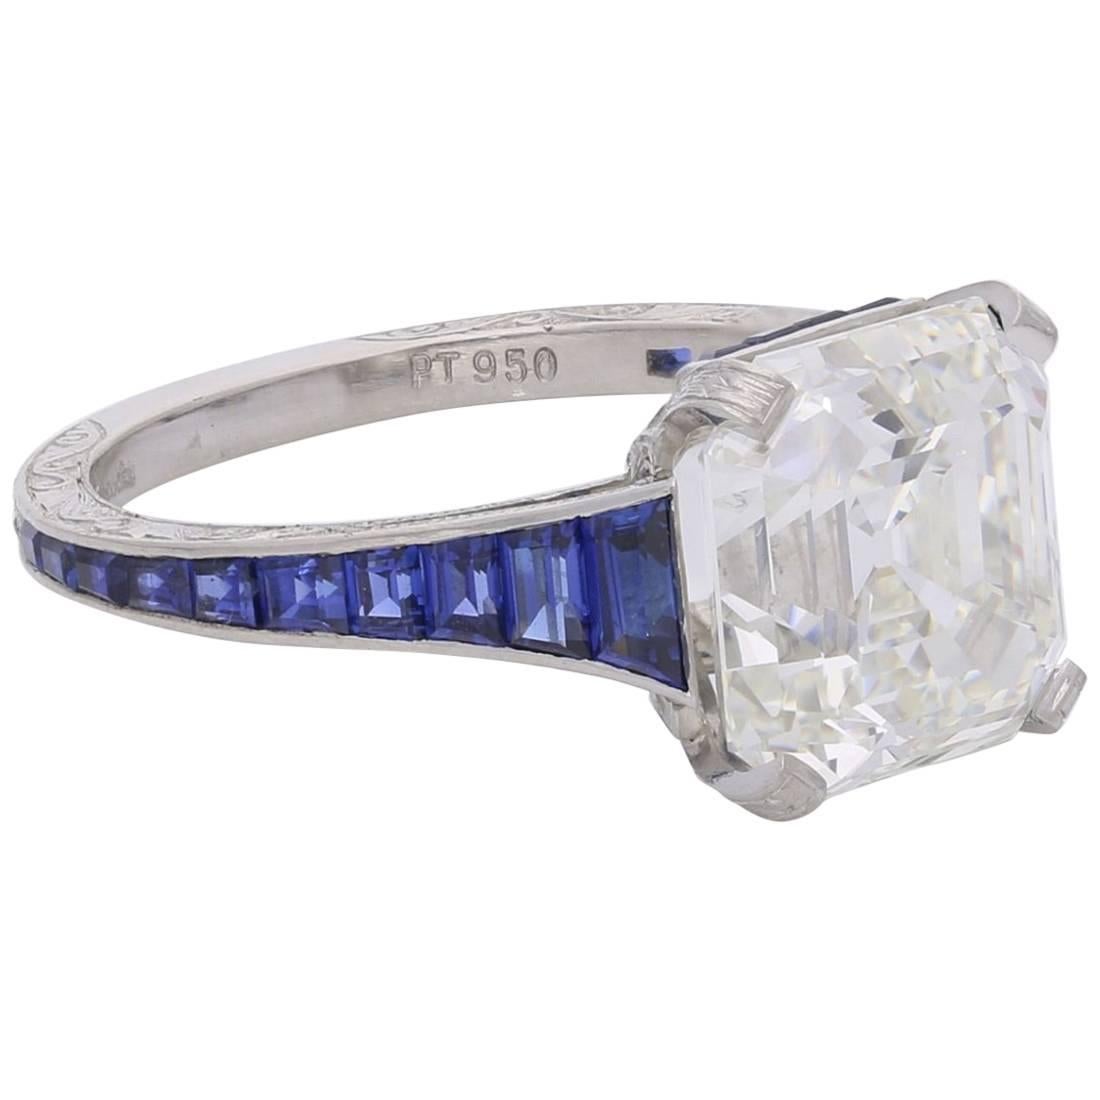 Hancocks 5.03 Carat Asscher Cut Diamond Ring with Tapering Calibre Set Sapphire